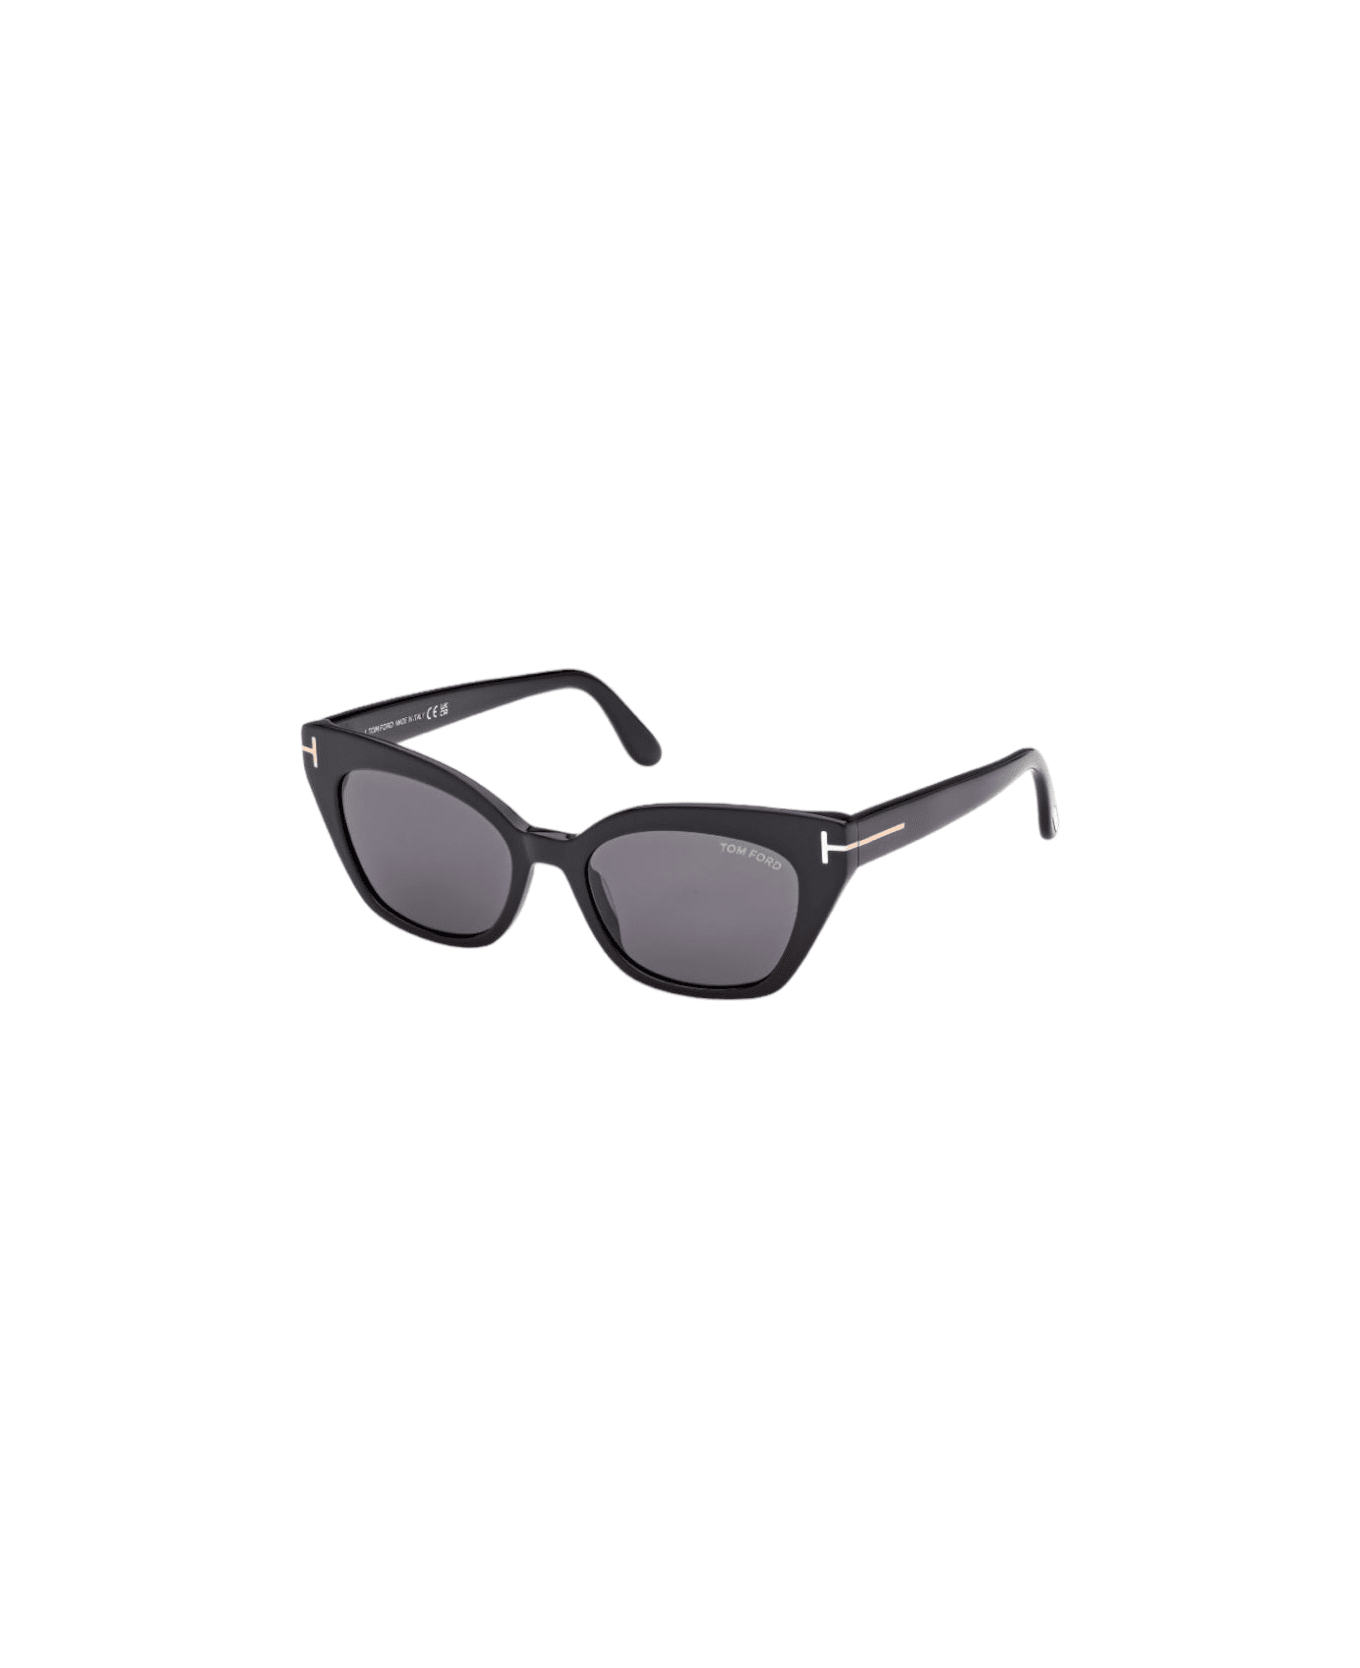 Tom Ford Eyewear Juliette - Ft 1031 /s Sunglasses サングラス